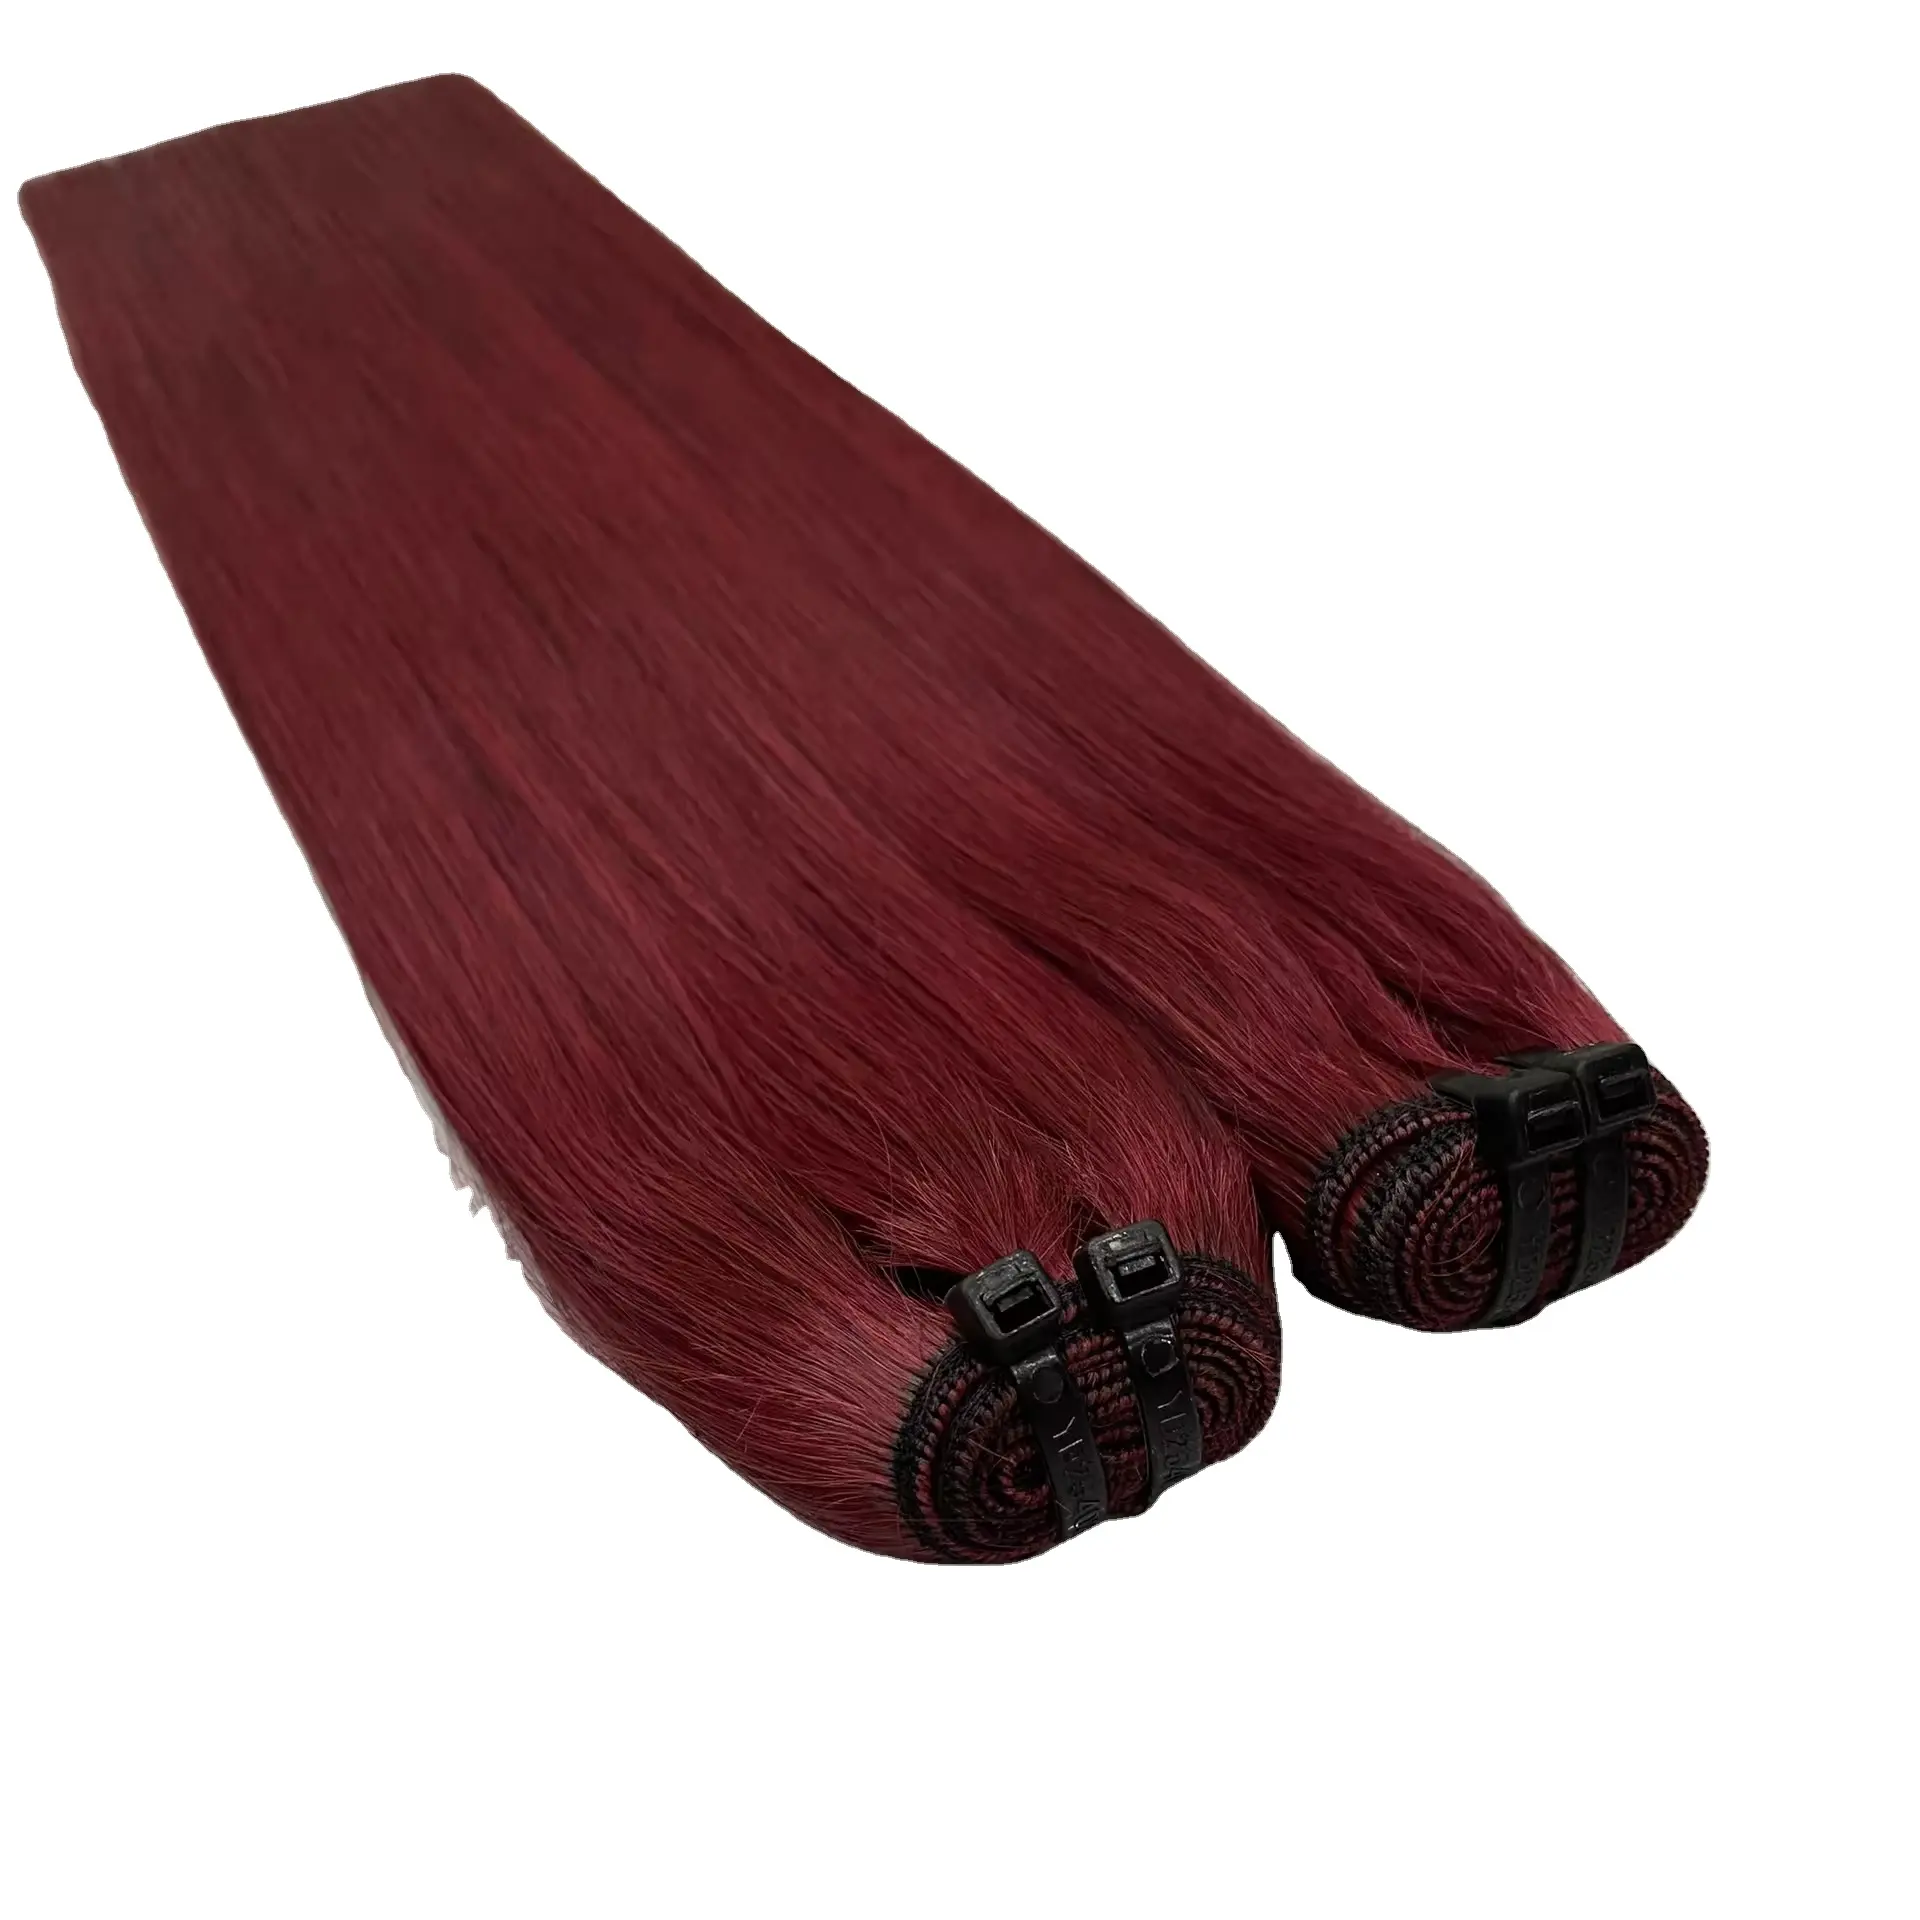 Top selling all beautiful colors bone straight genius weft hair extensions wholesale Vietnamese raw hair virgin hair